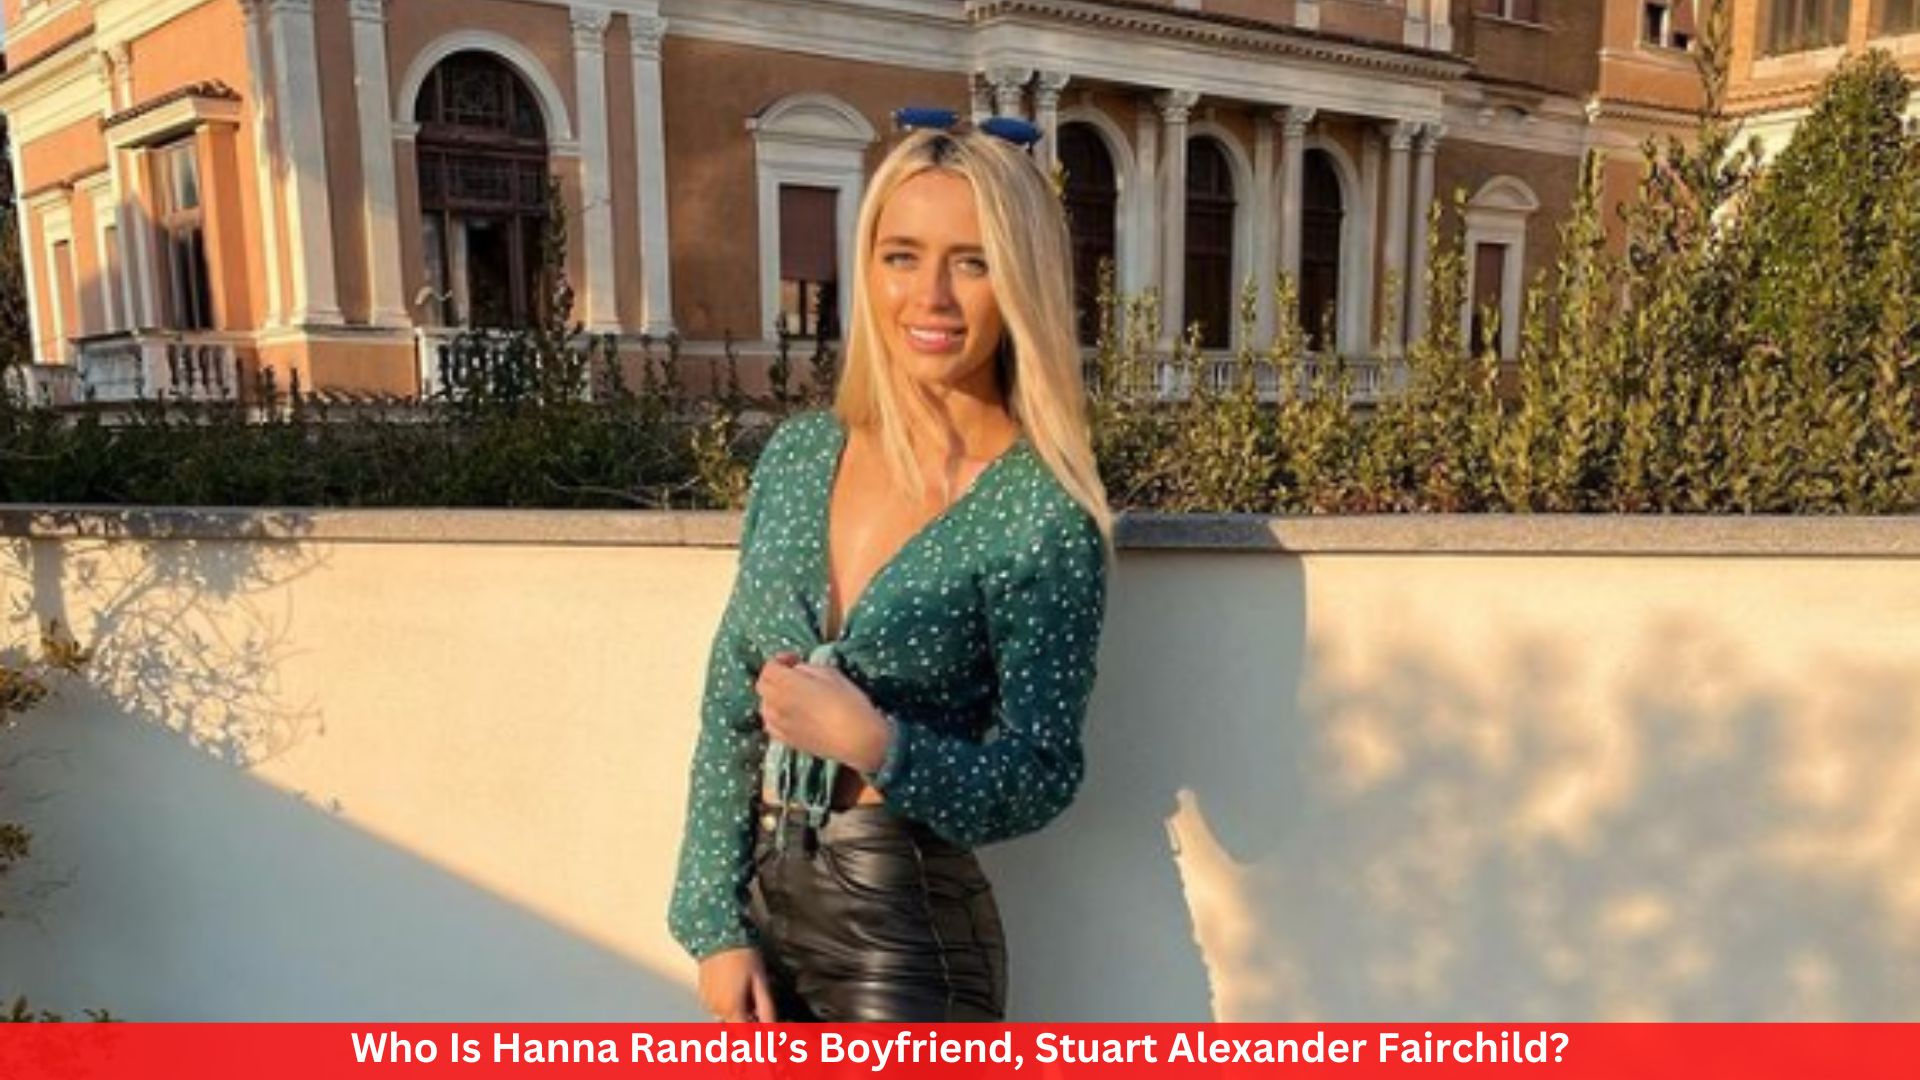 Who Is Hanna Randall’s Boyfriend, Stuart Alexander Fairchild?